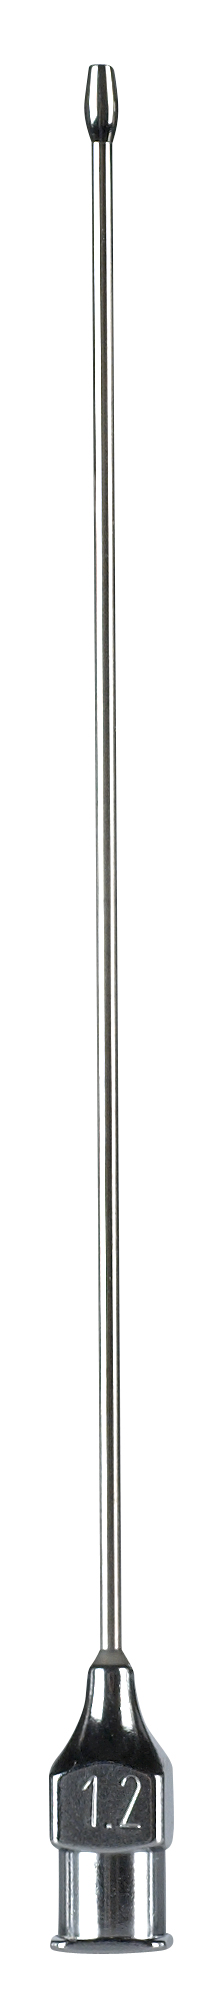 Olive Tip Needle, 1.2 x 80 mm, Luer Lock